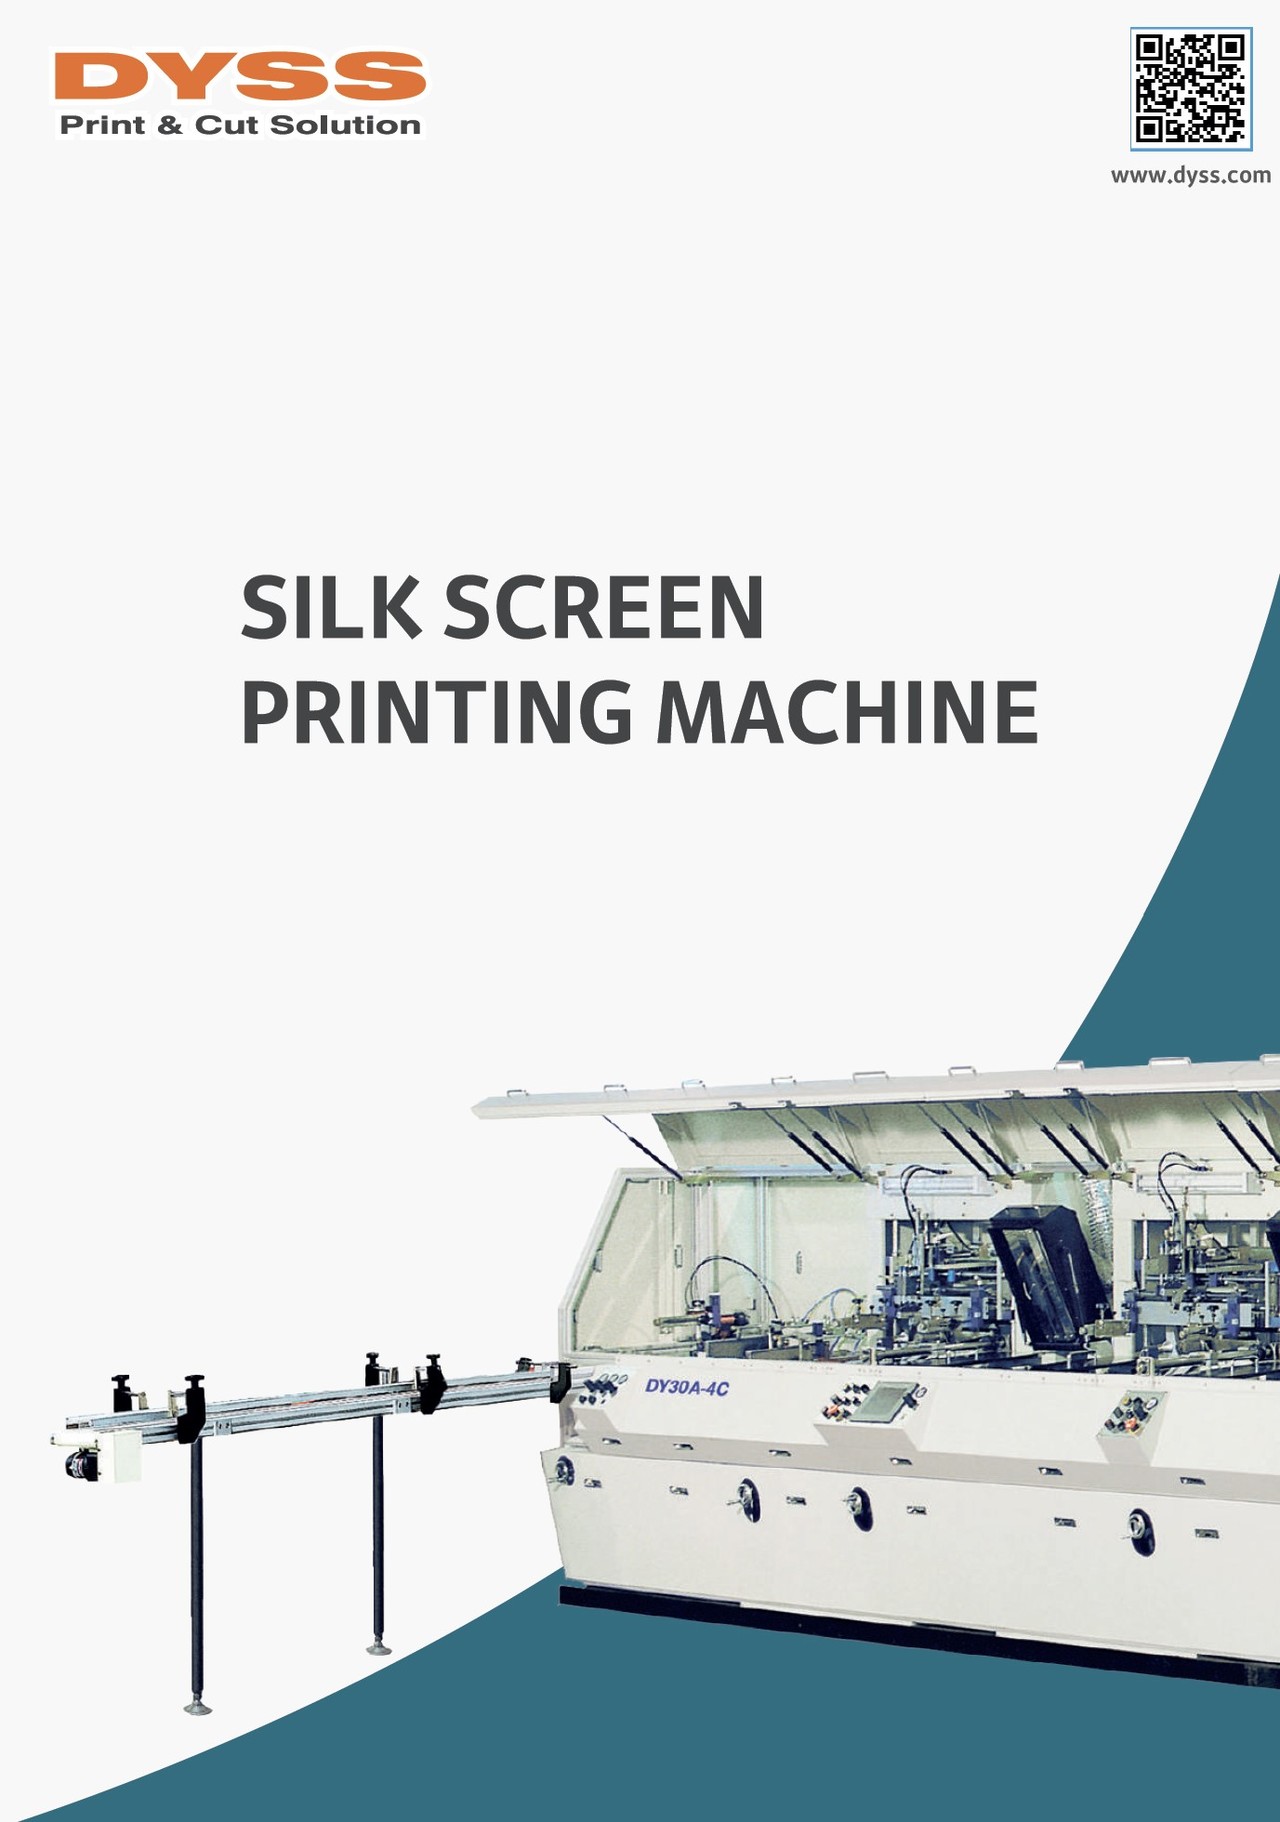 DYSS Silk Screen Printer Catalog, 대영시스템 실크 스크린 프린터 카달로그 브로셔